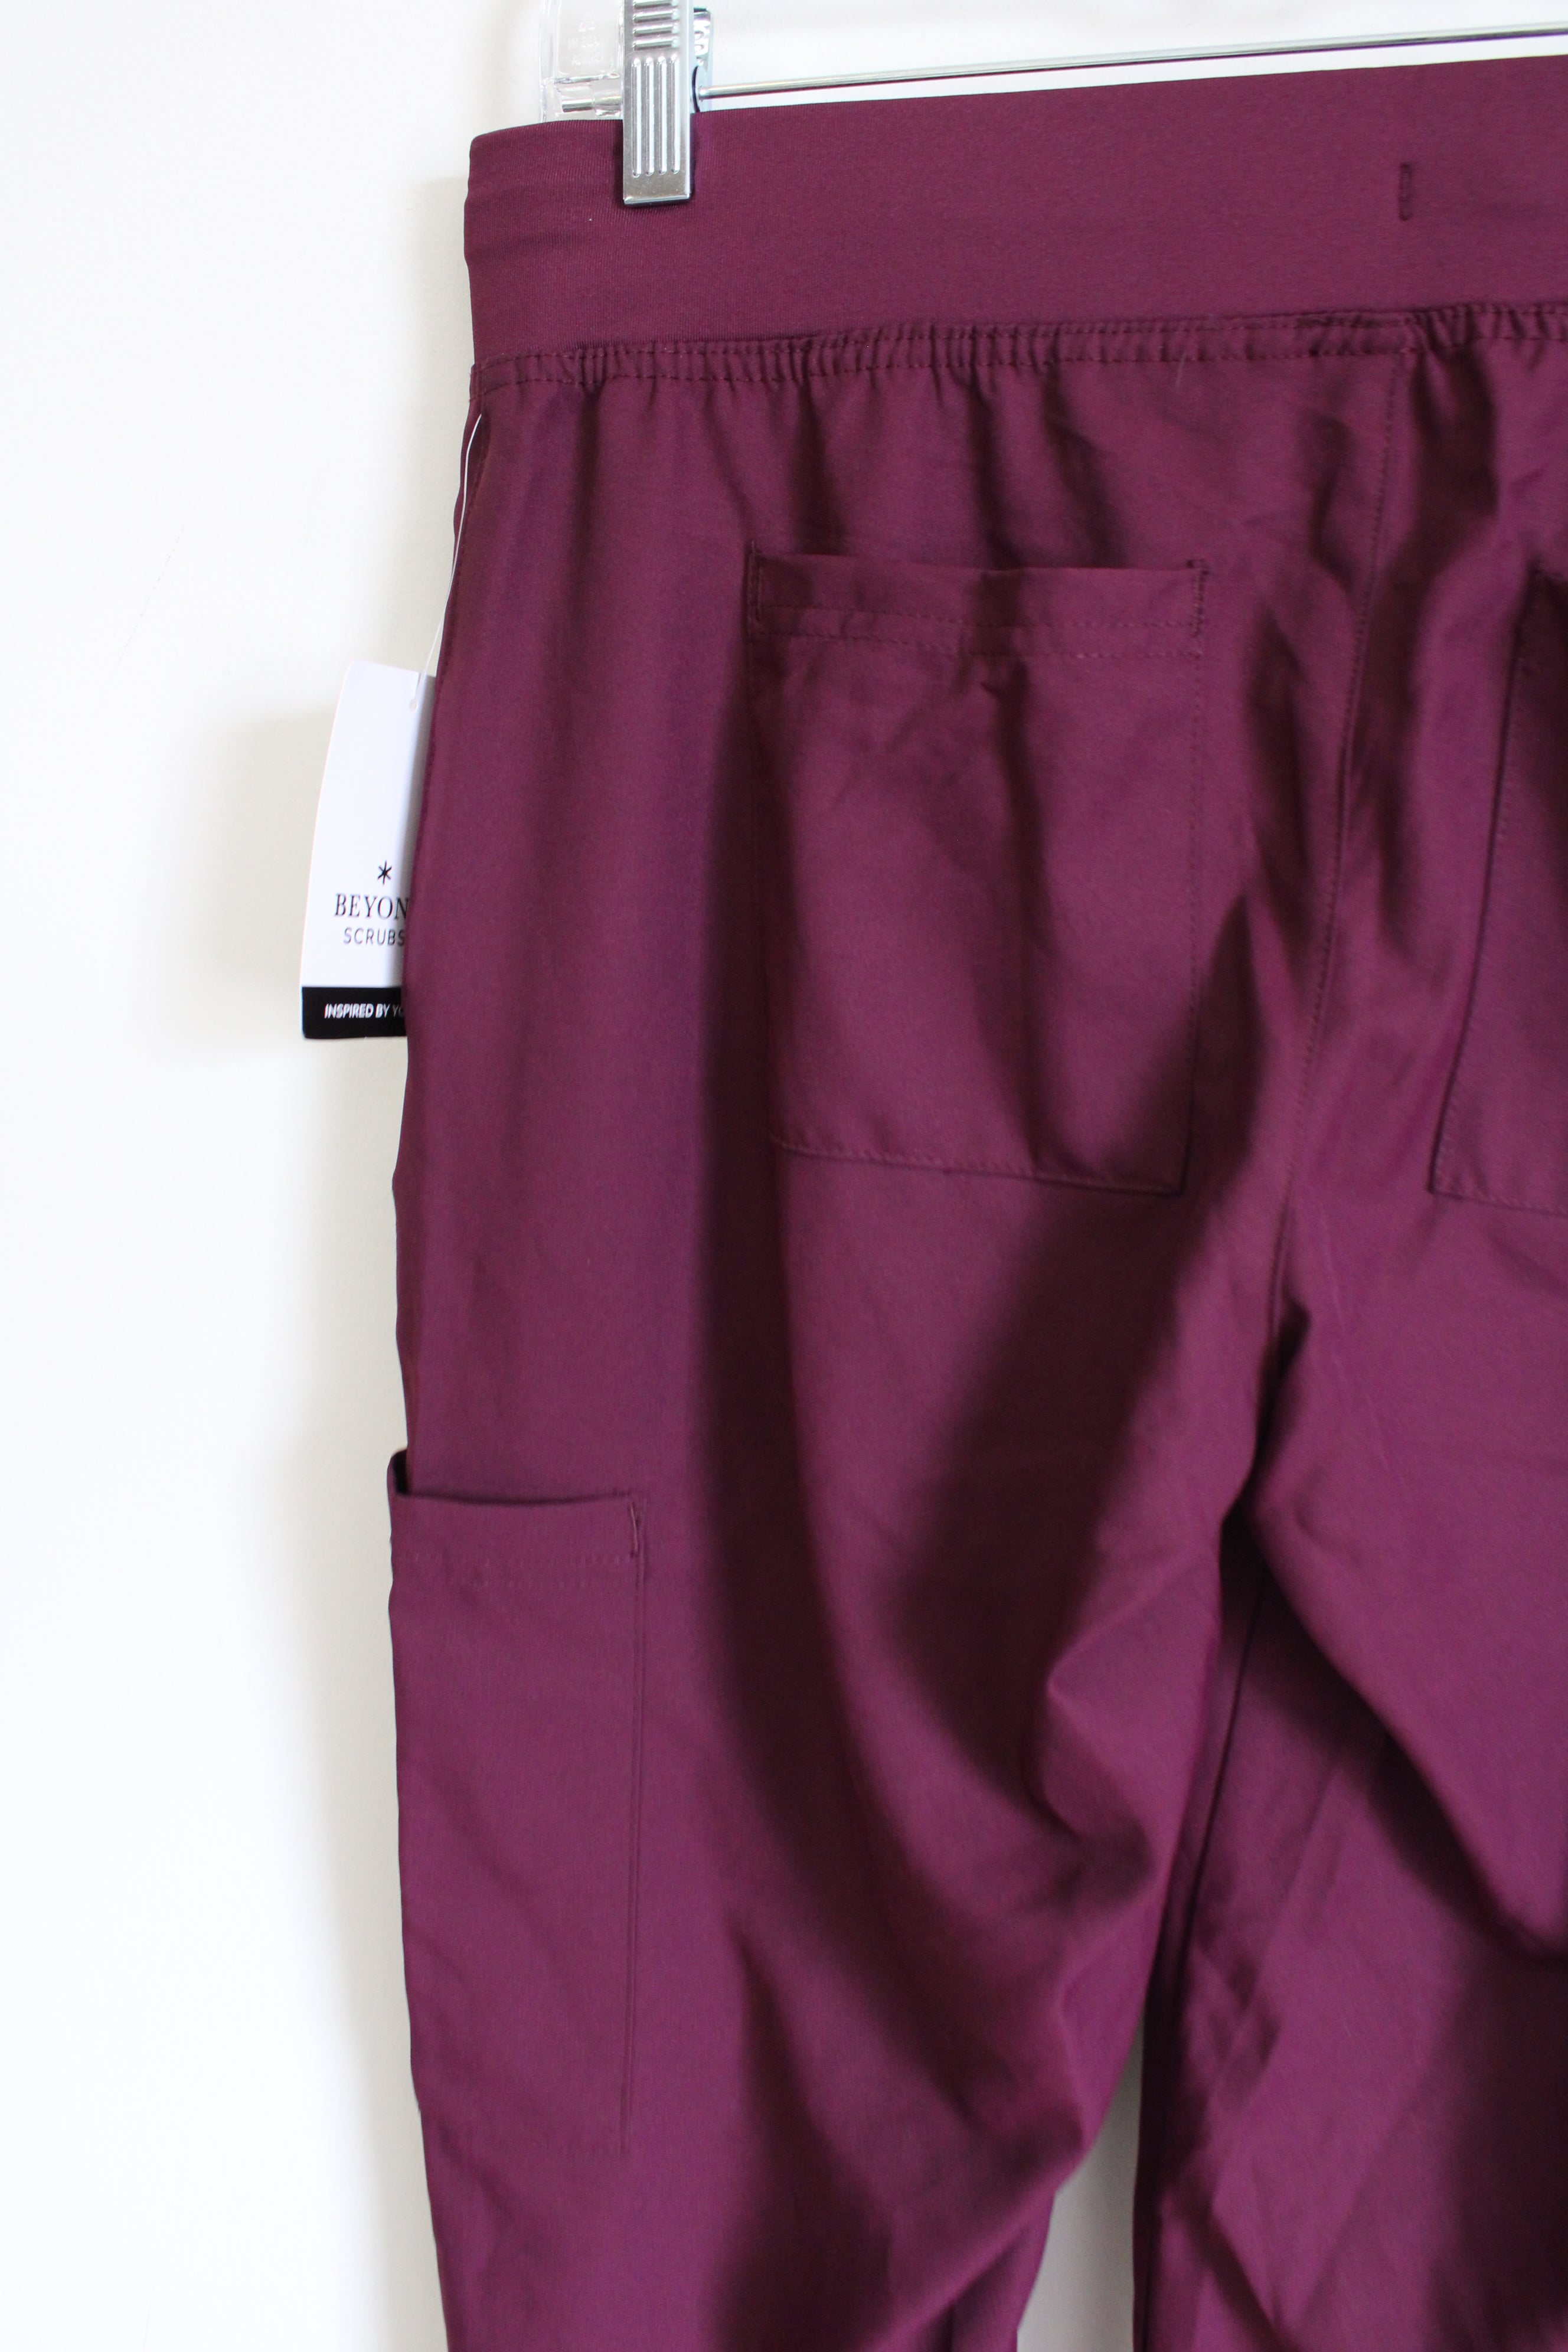 NEW Beyond Scrubs Wine Purple Jogger Tapered Pants | S Petite